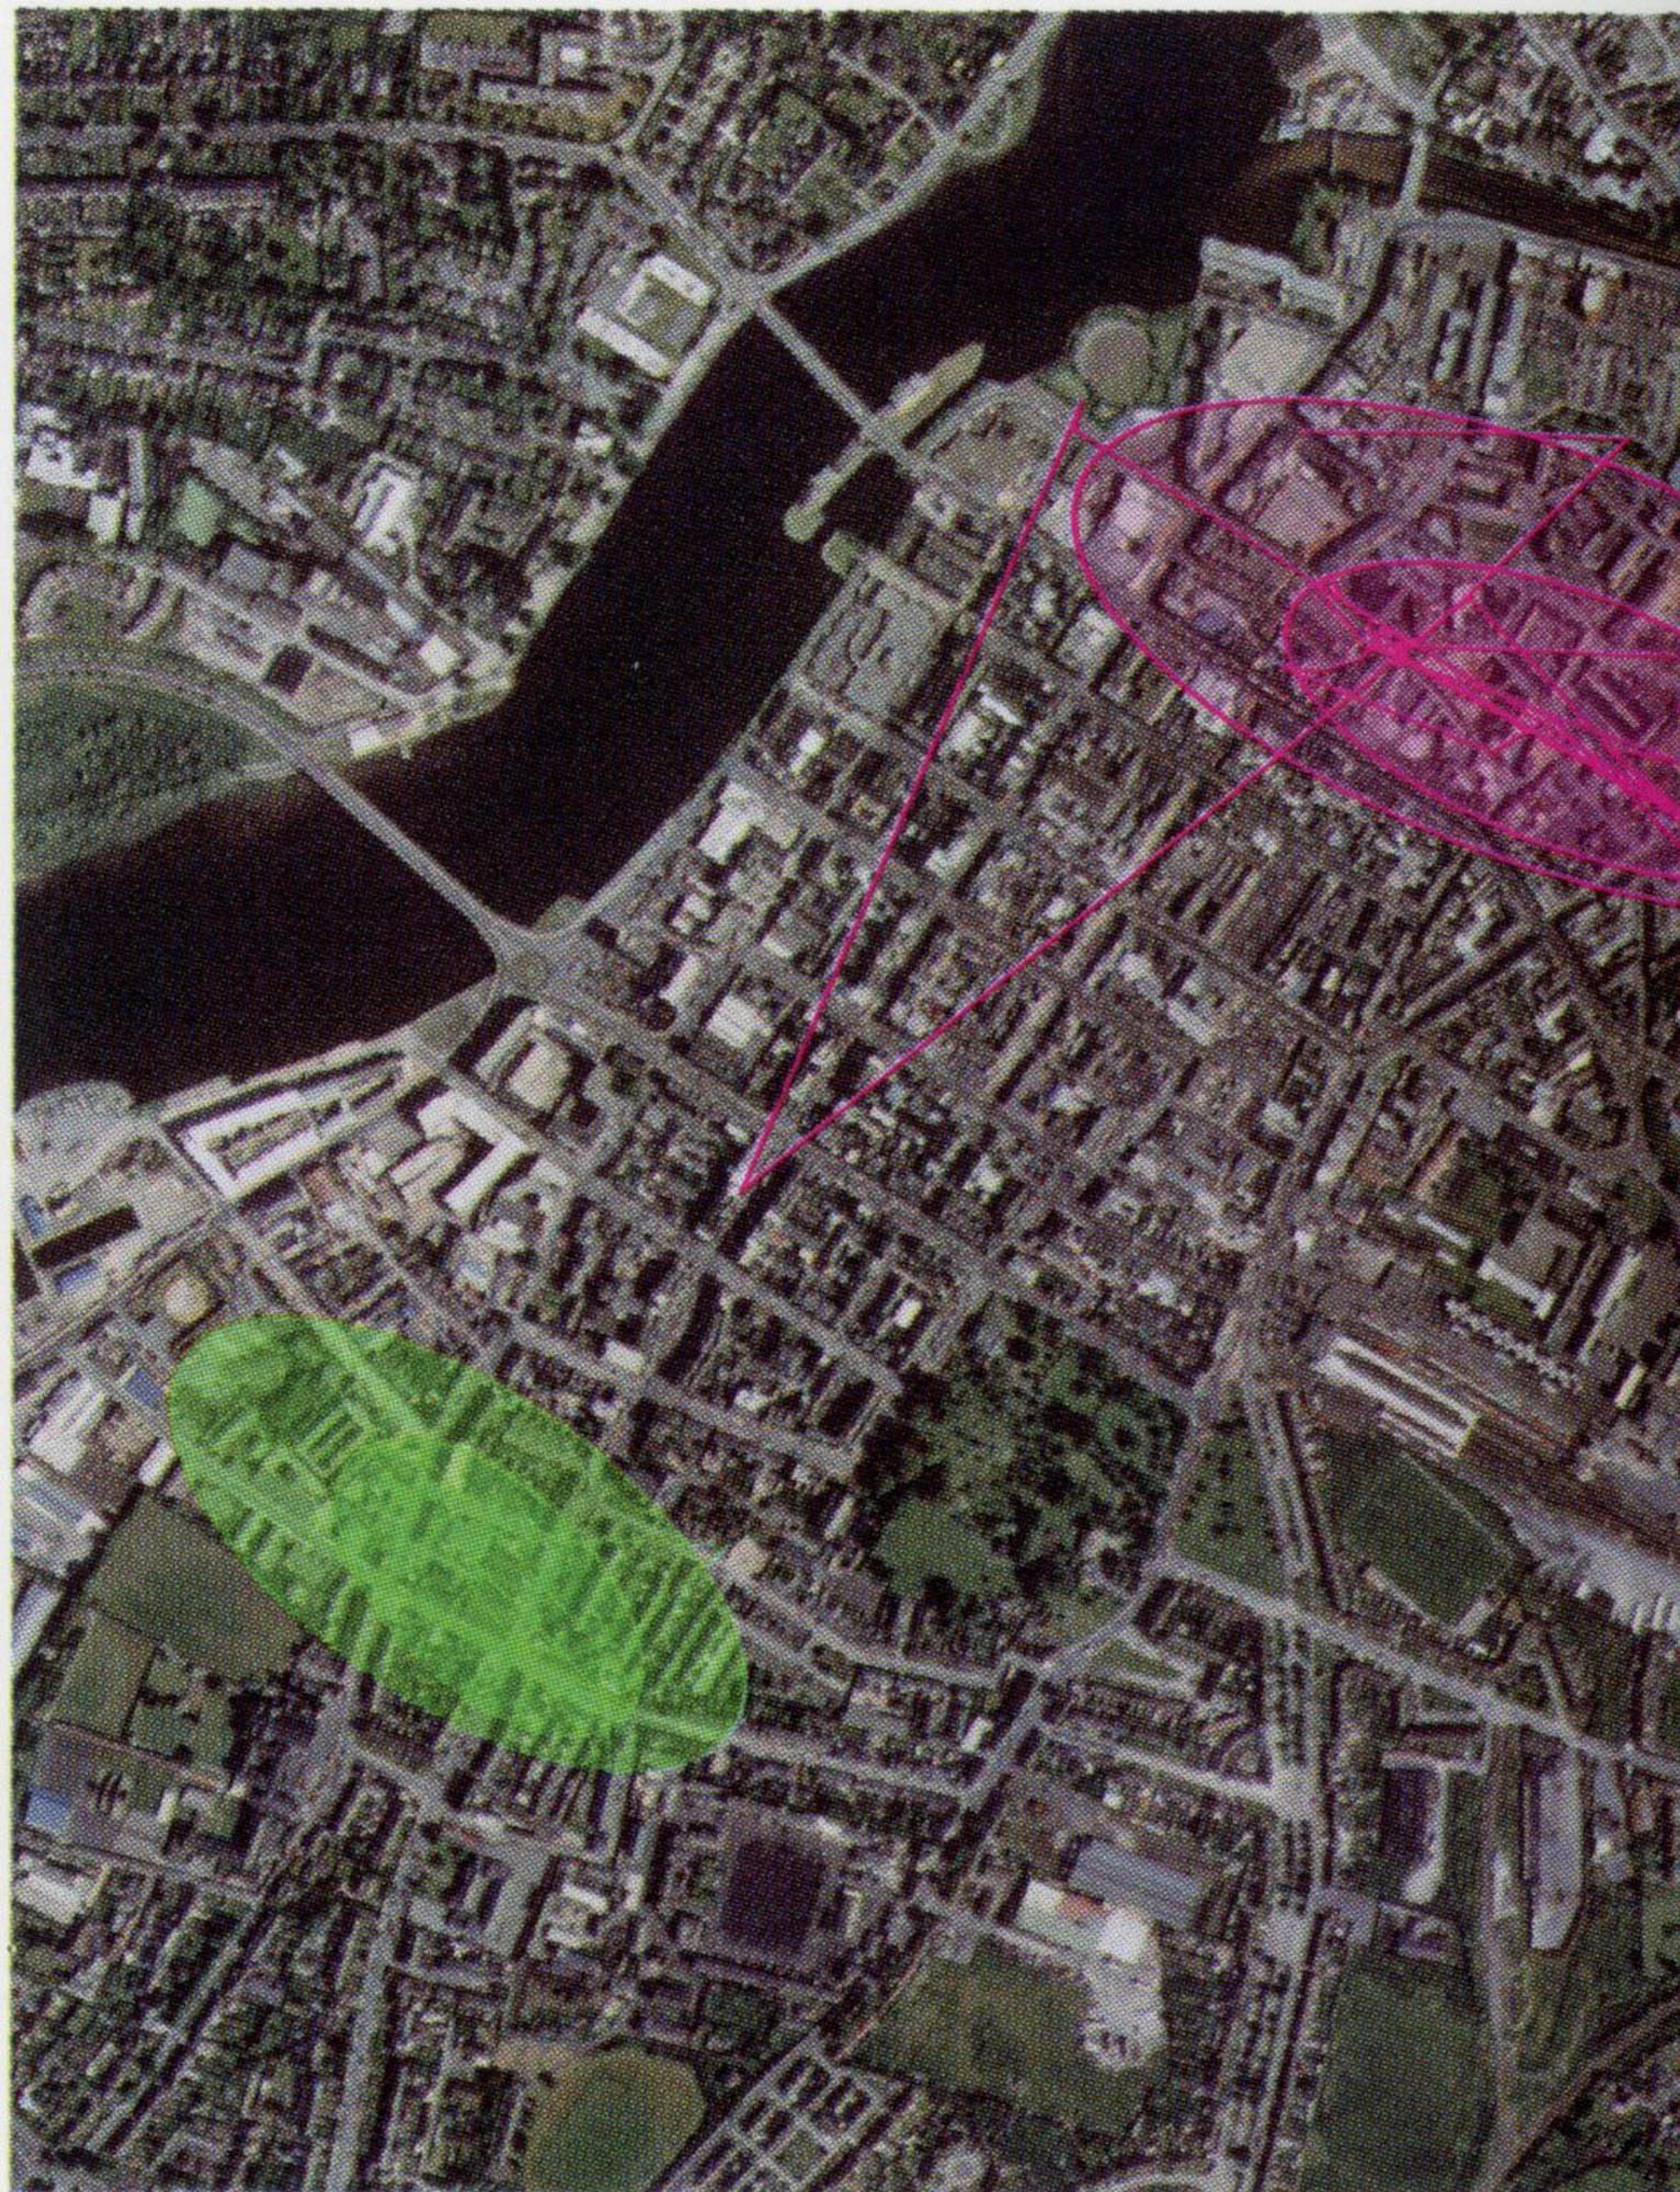 (2004) Volkmar Klien / Edward Lear, Traces of Fire, 2004, city wide tracking project.